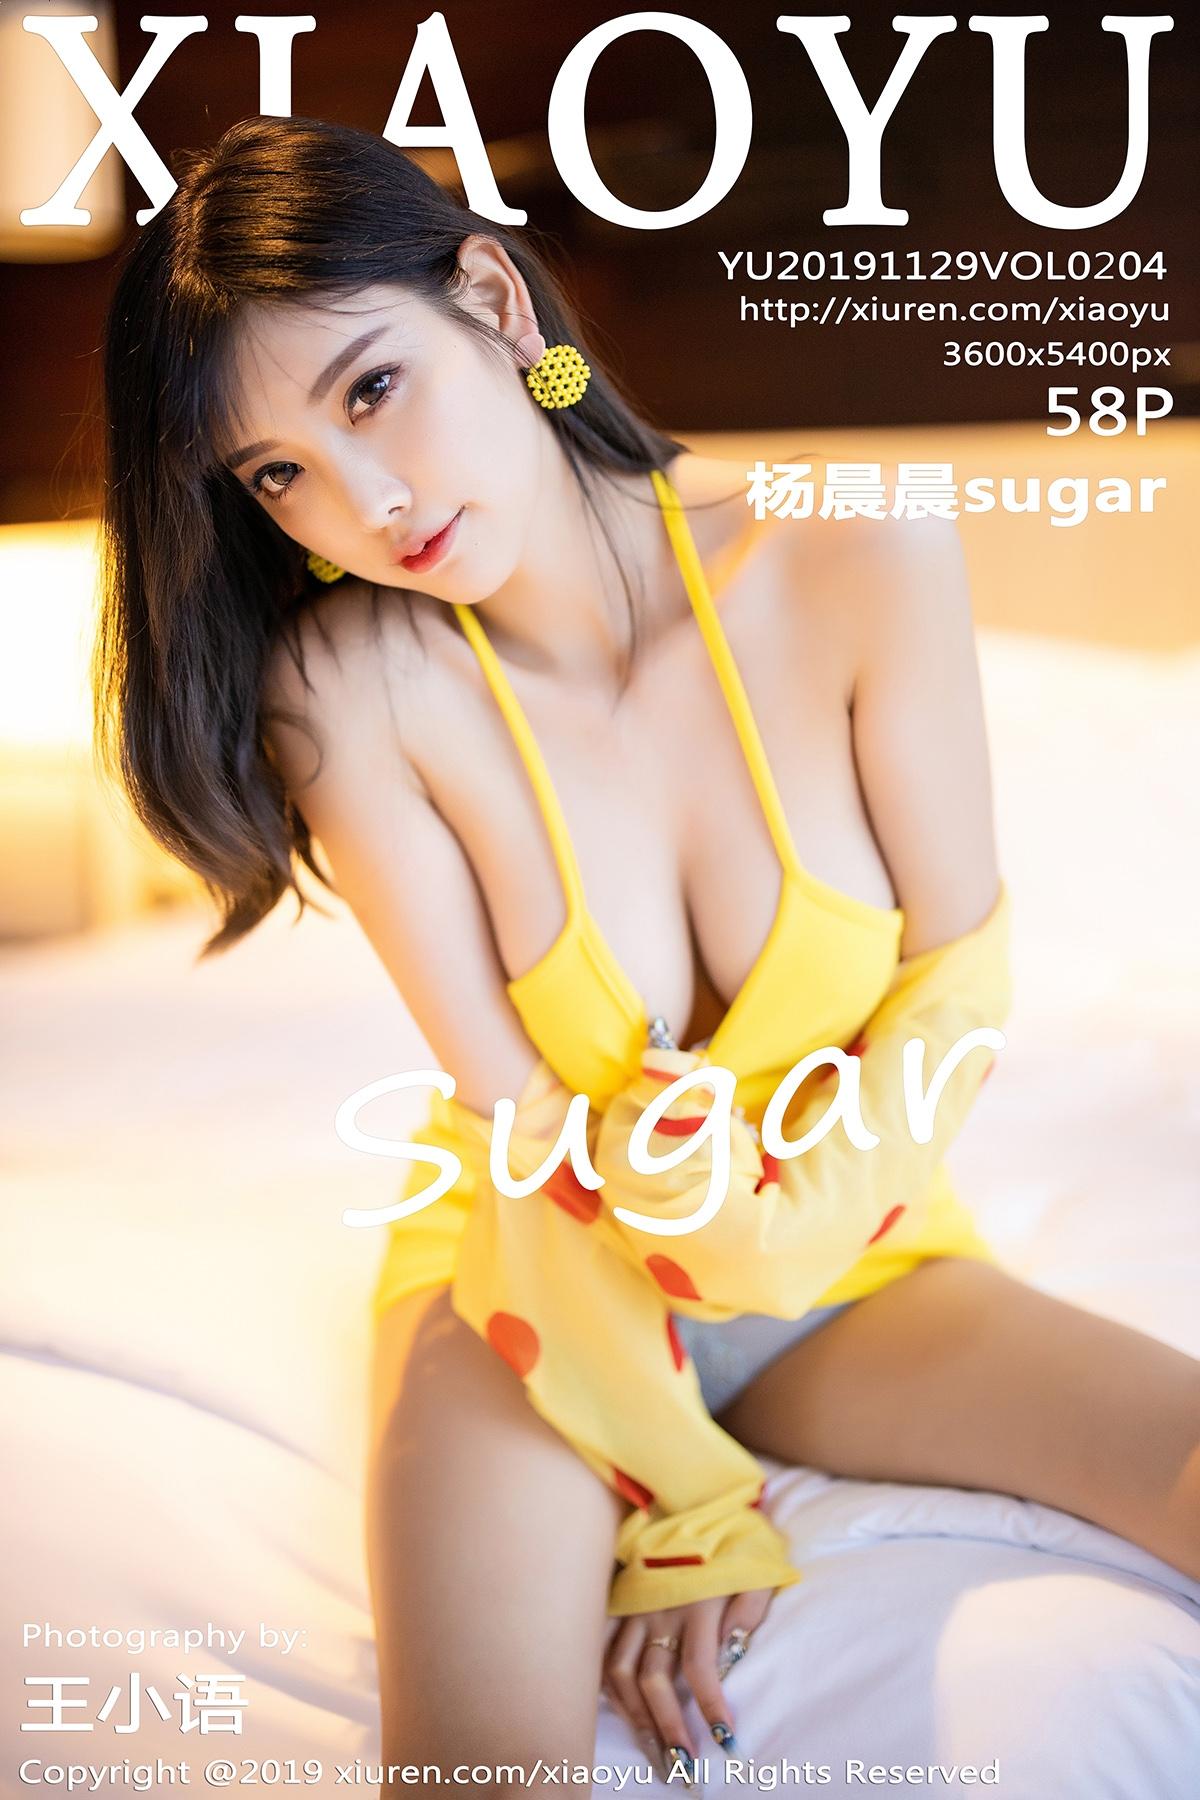 Xiaoyu 语画界 2019.11.29 VOL.204 杨晨晨sugar - 50.jpg